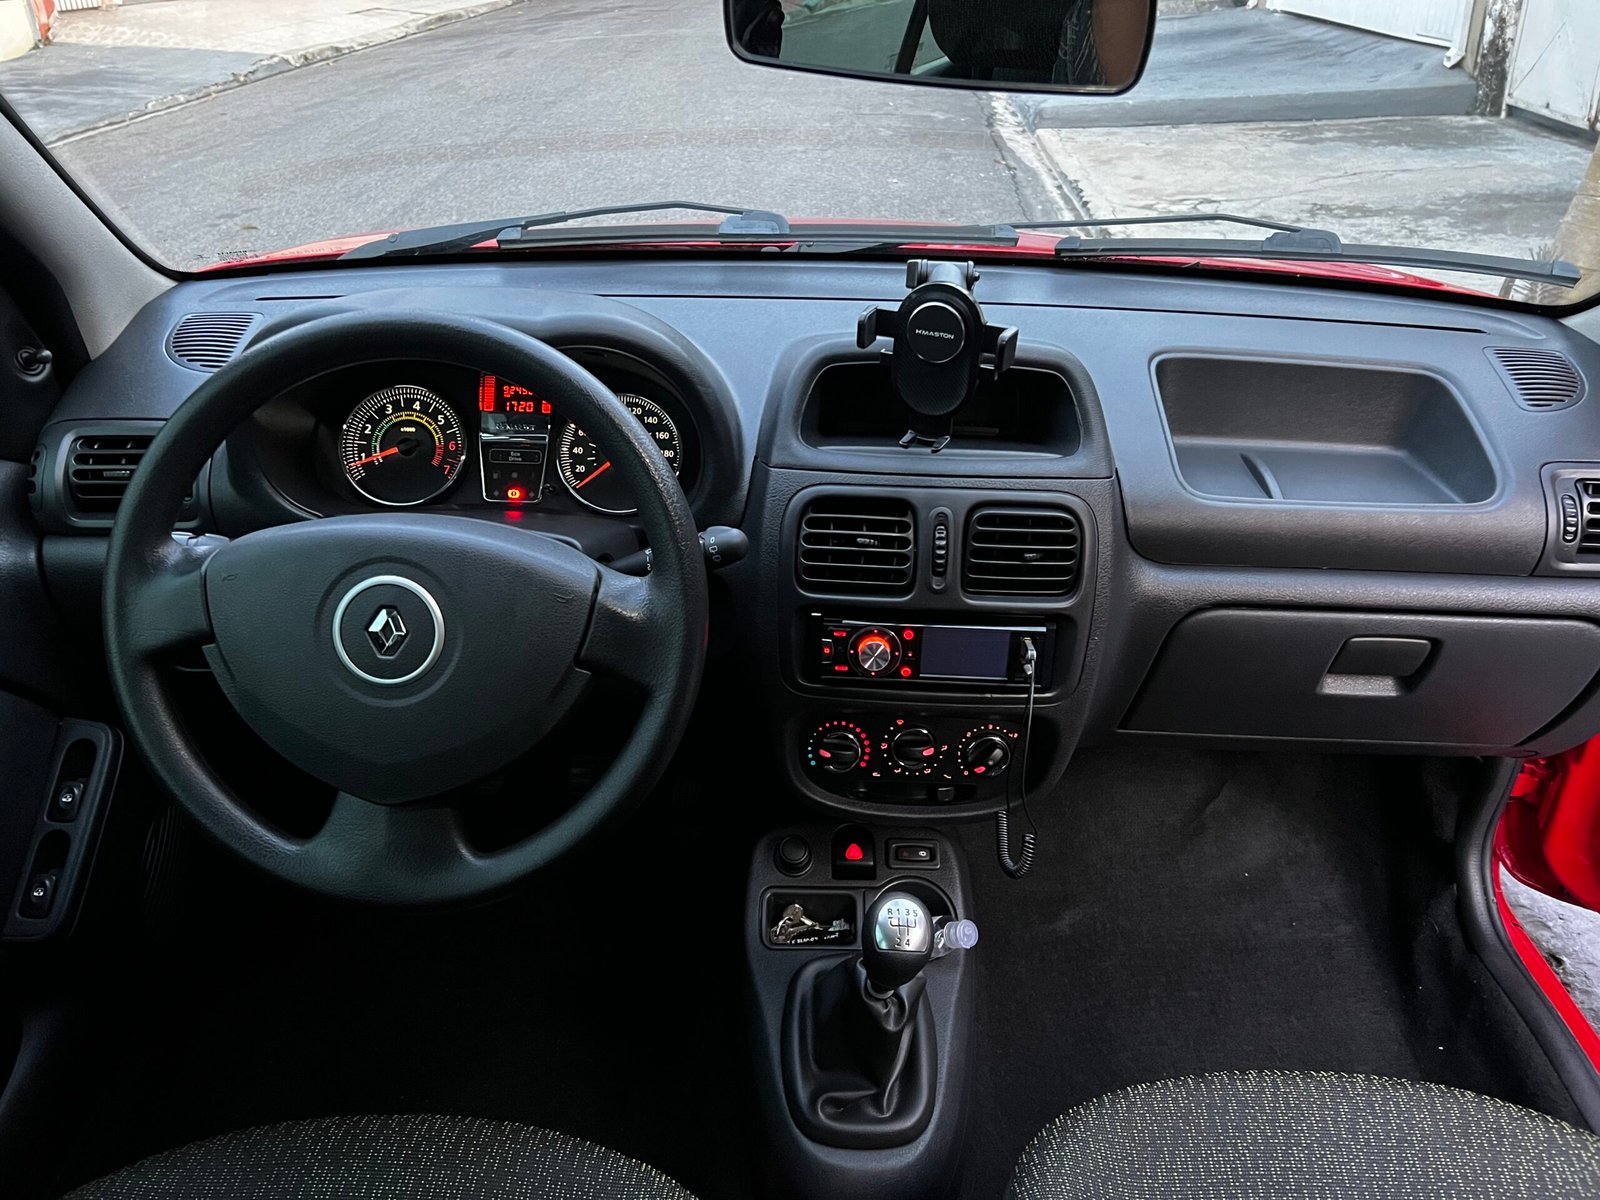 Renault Clio 2014 – Completo baixa KM